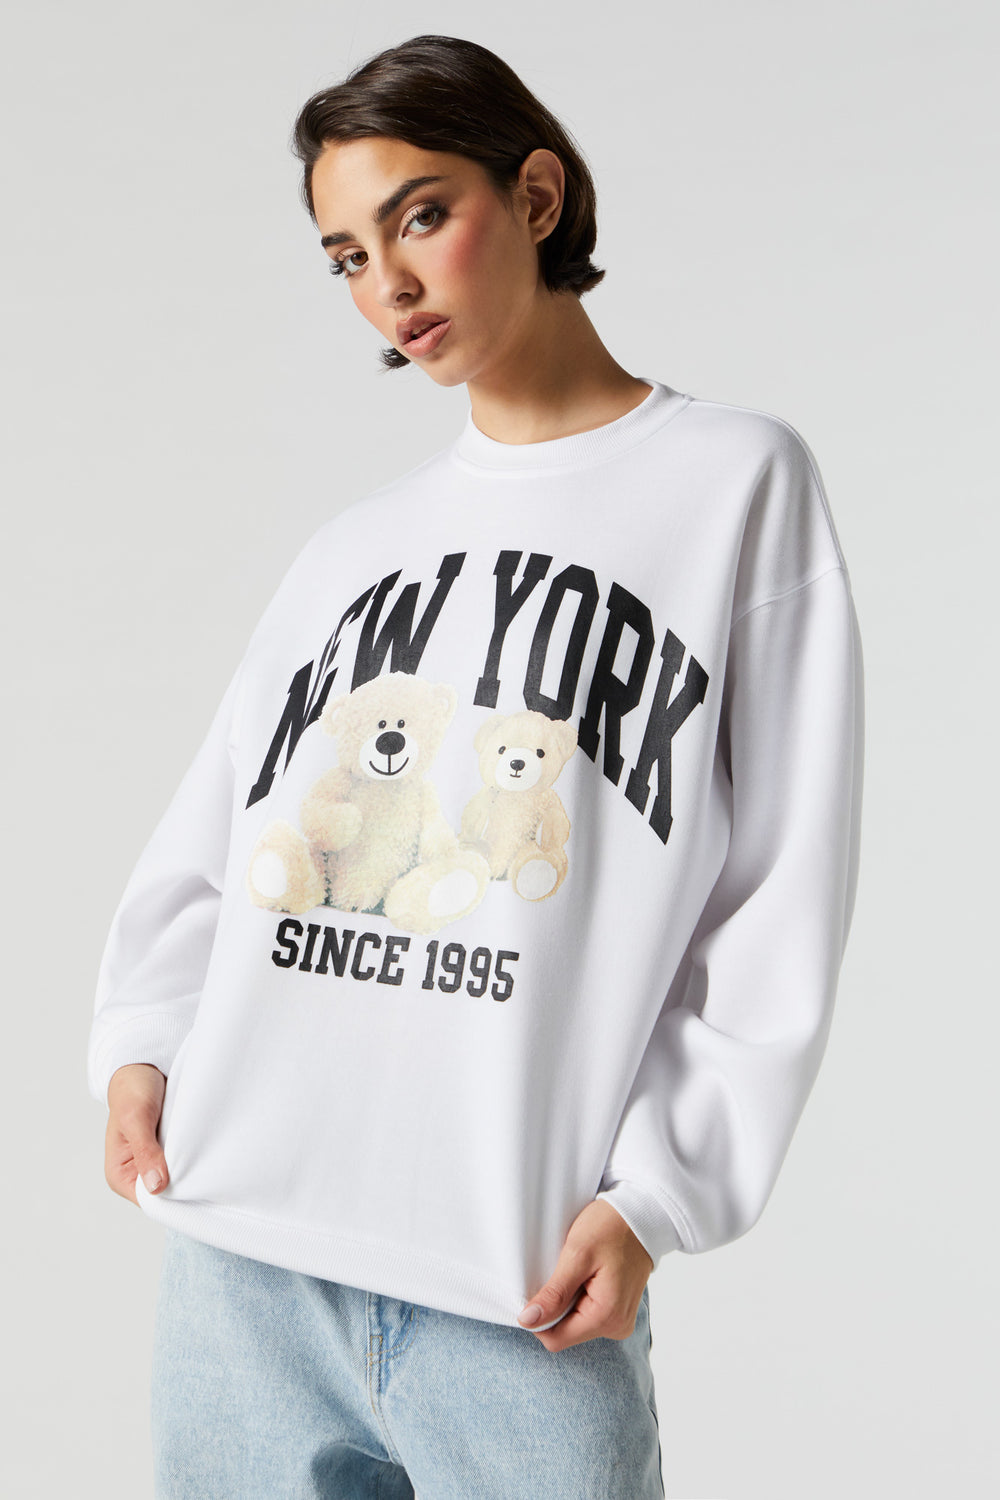 New York Graphic Fleece Sweatshirt New York Graphic Fleece Sweatshirt 1